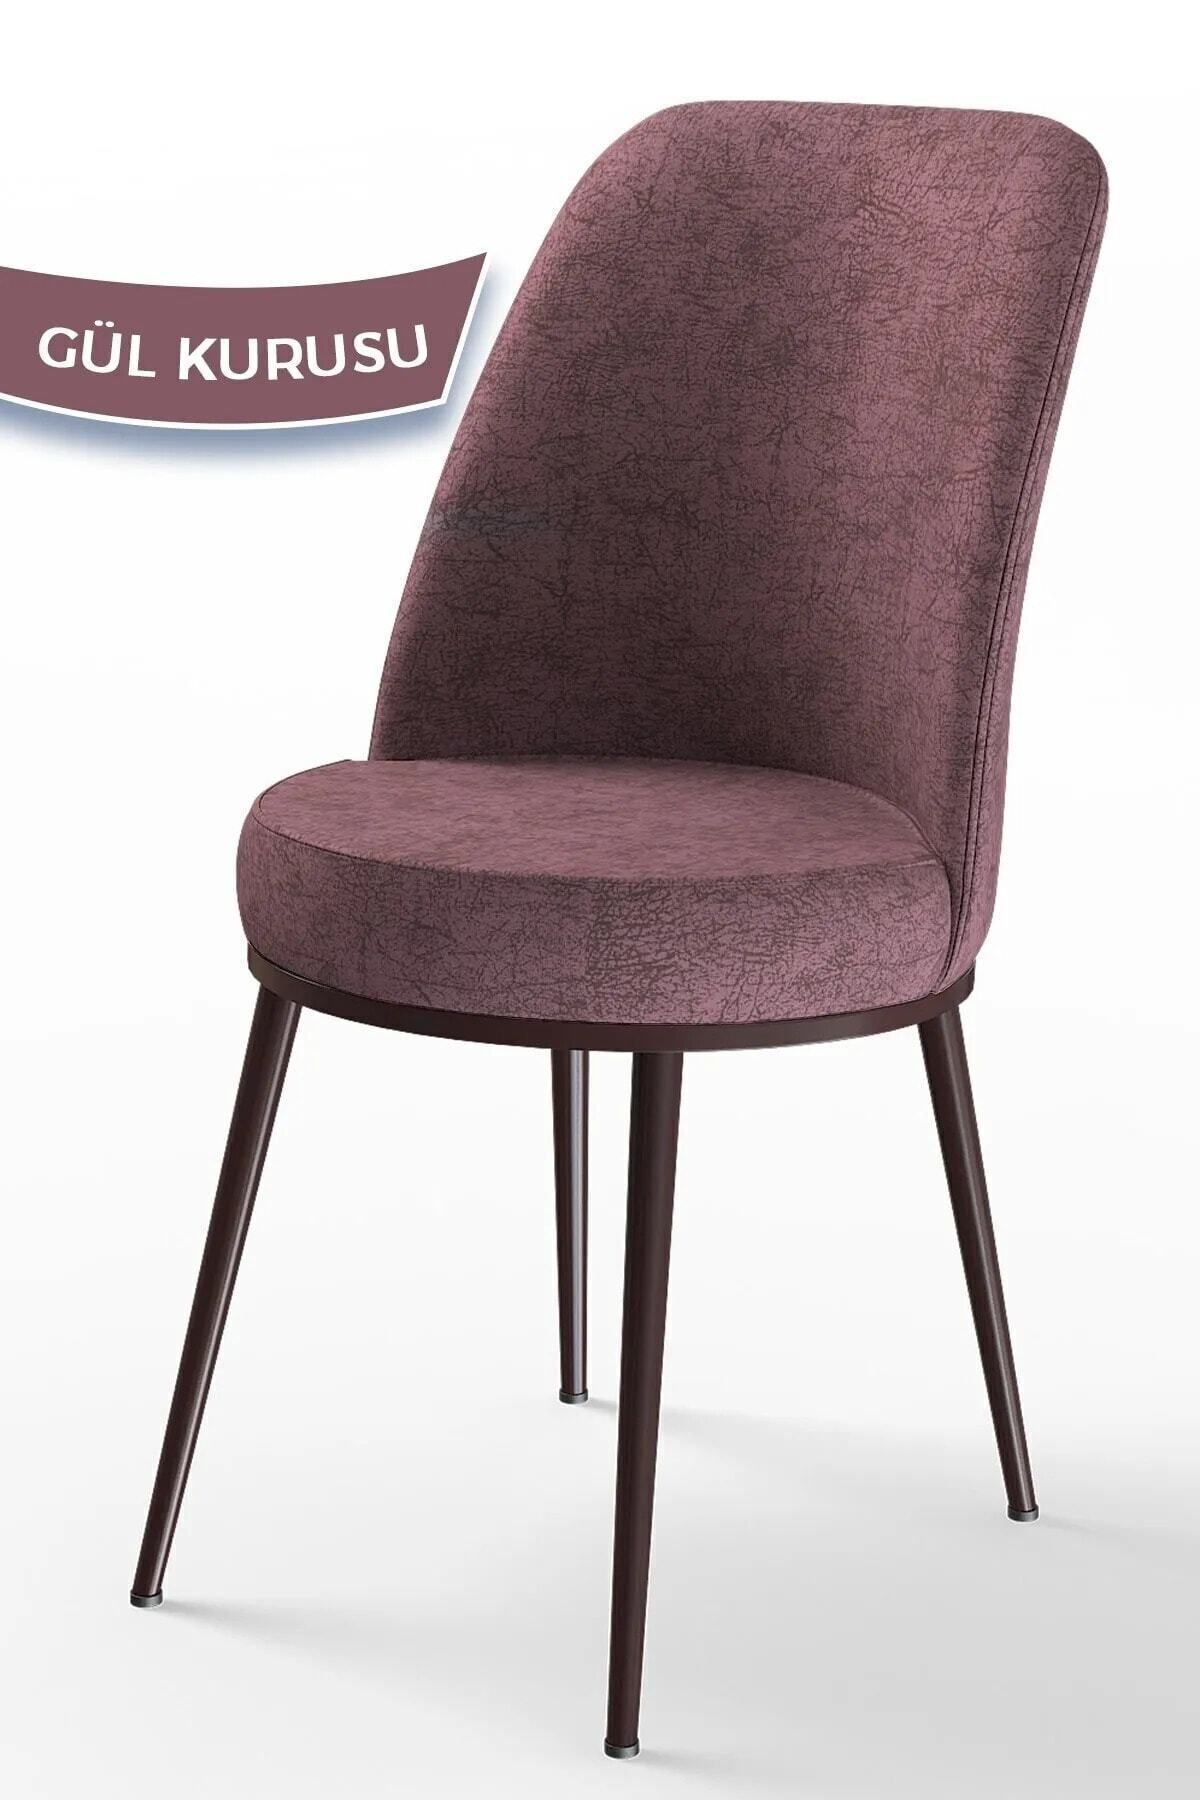 Canisa Dexa Serisi, Üst Kalite Mutfak Sandalyesi, Metal Kahverengi Iskeletli, Gülkurusu Sandalye